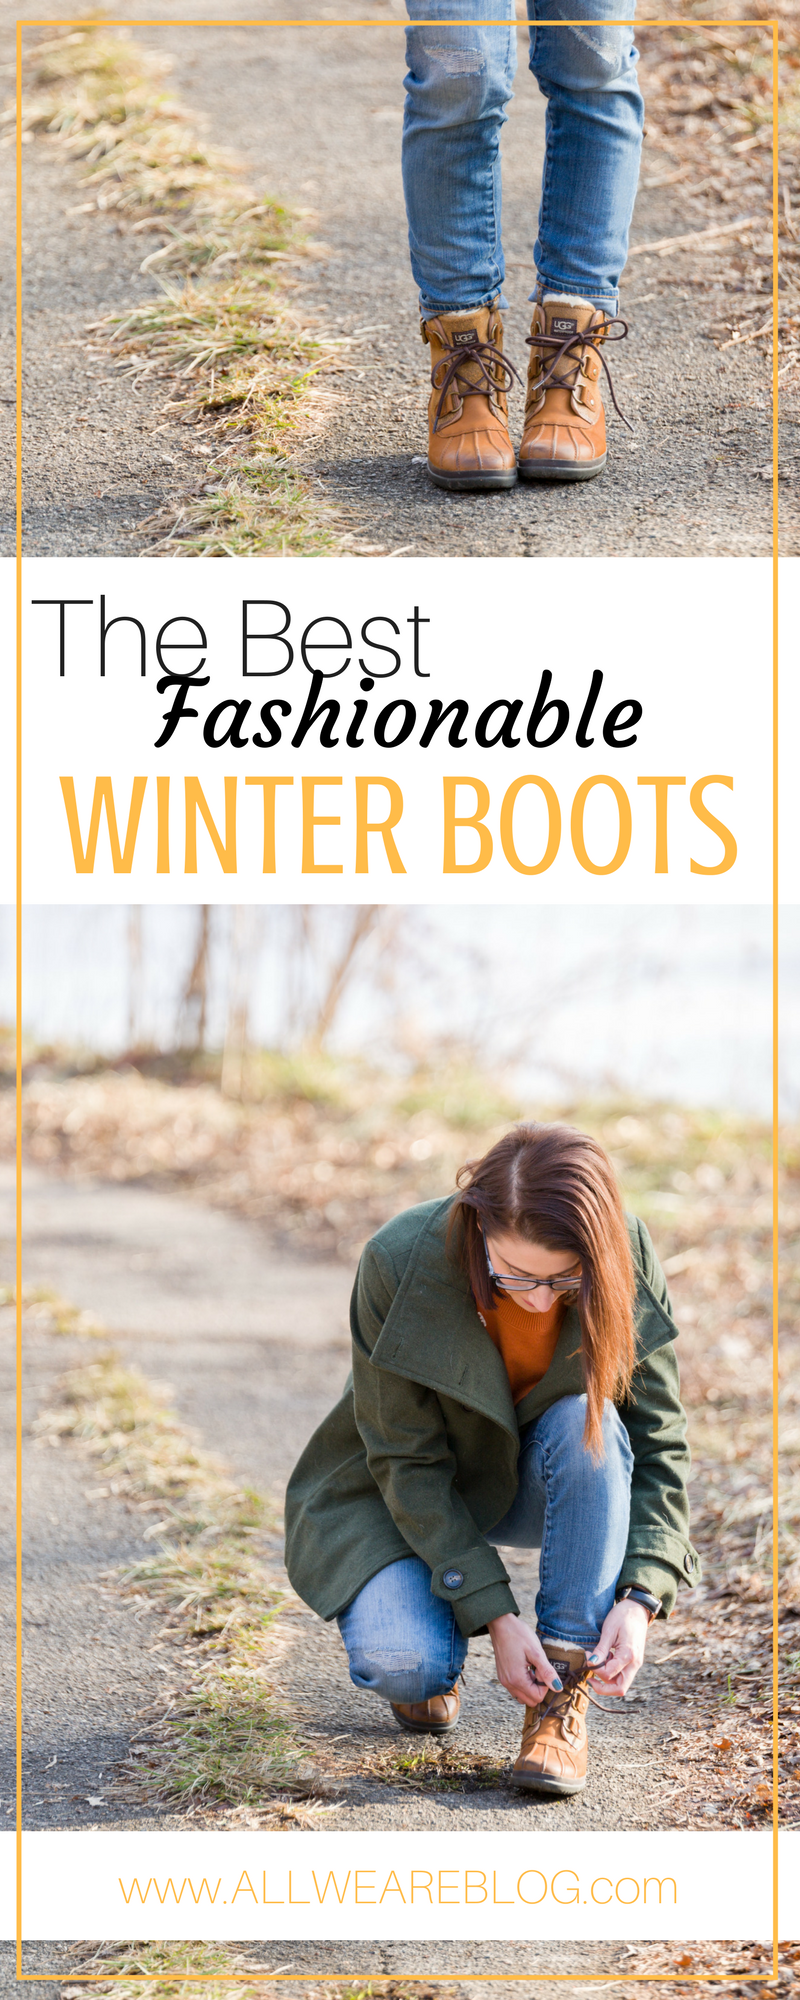 the best fashionable winter boots on allweareblog.com